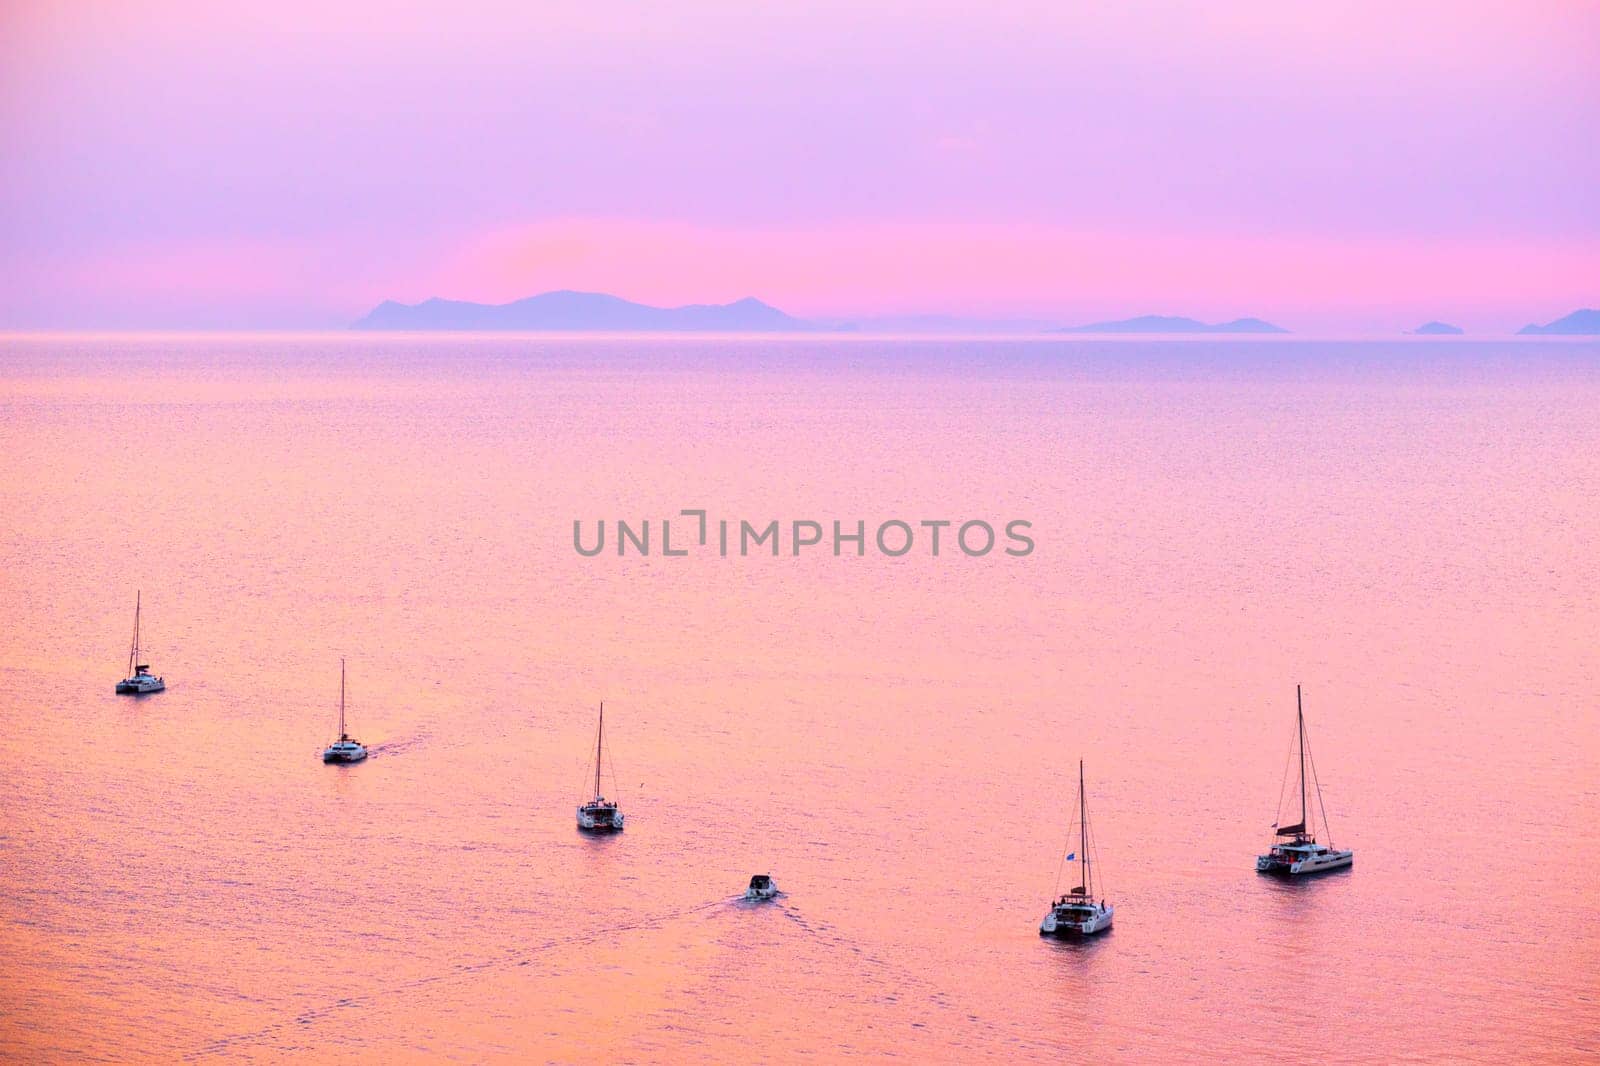 Tourist yachts boat in Aegean sea near Santorini island with tourists watching sunset viewpoint. Santorini, Greece by dimol